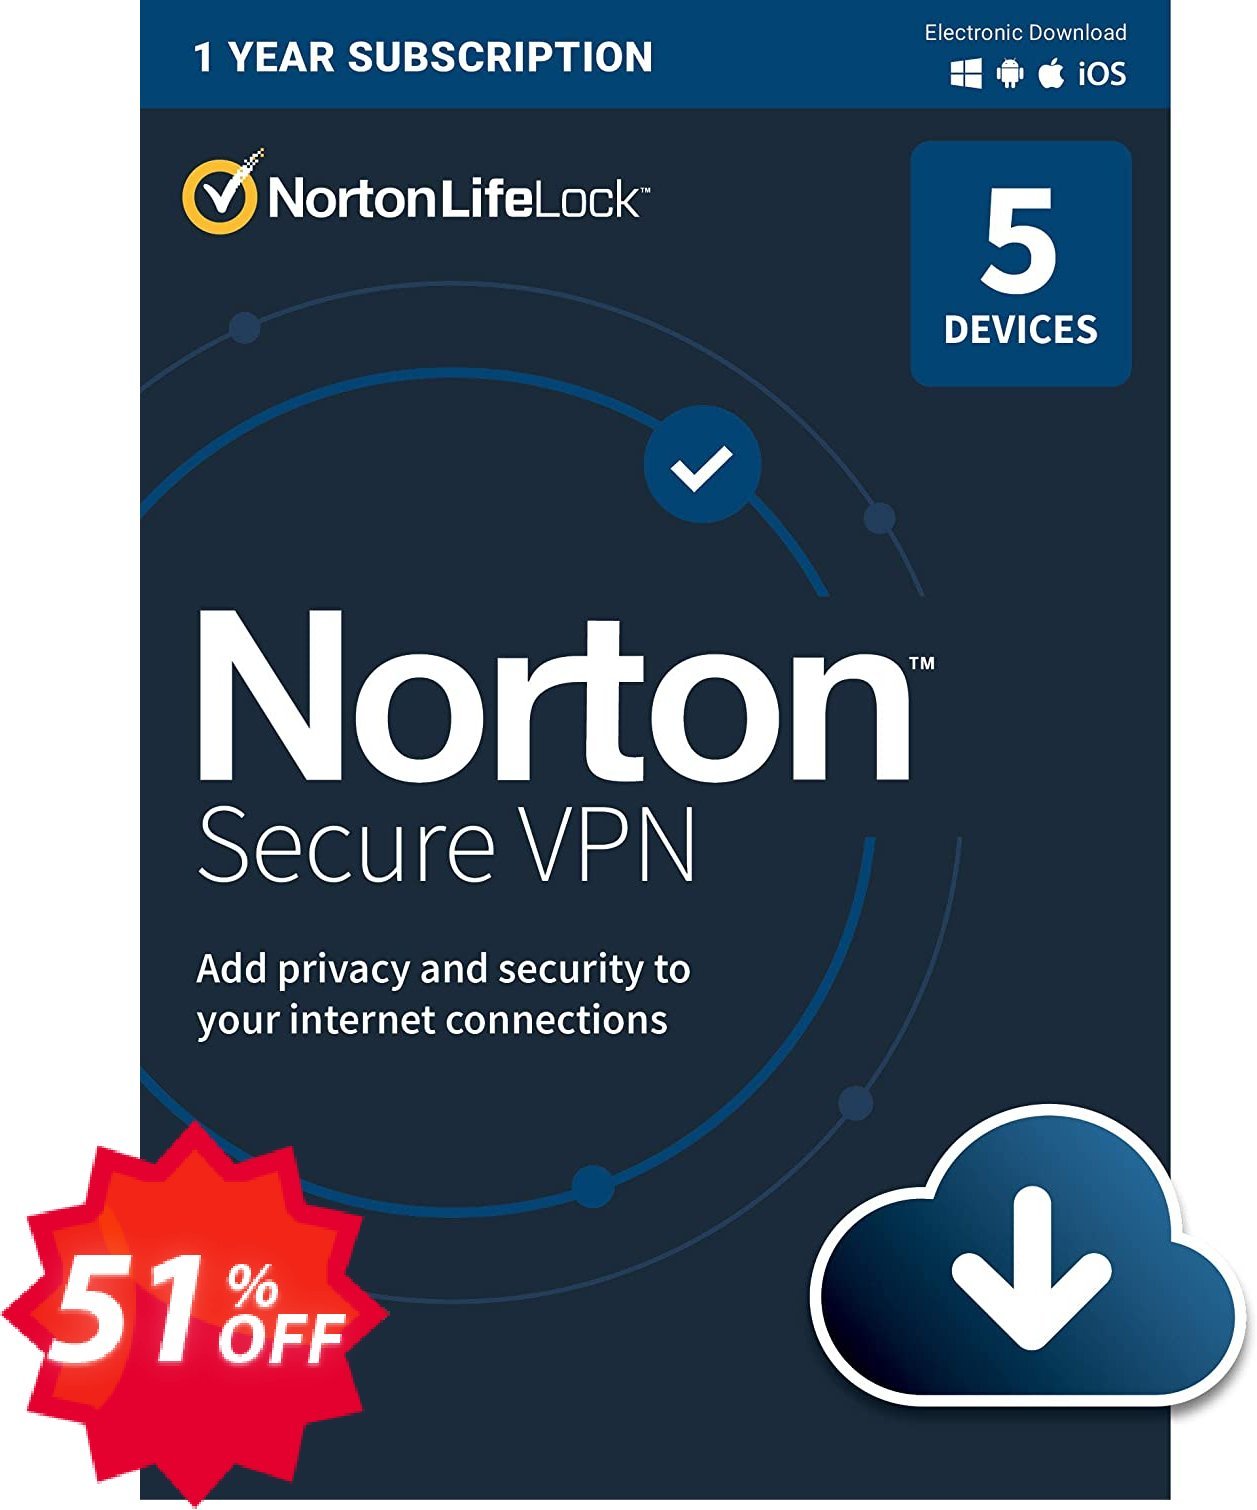 Norton Secure VPN Coupon code 51% discount 